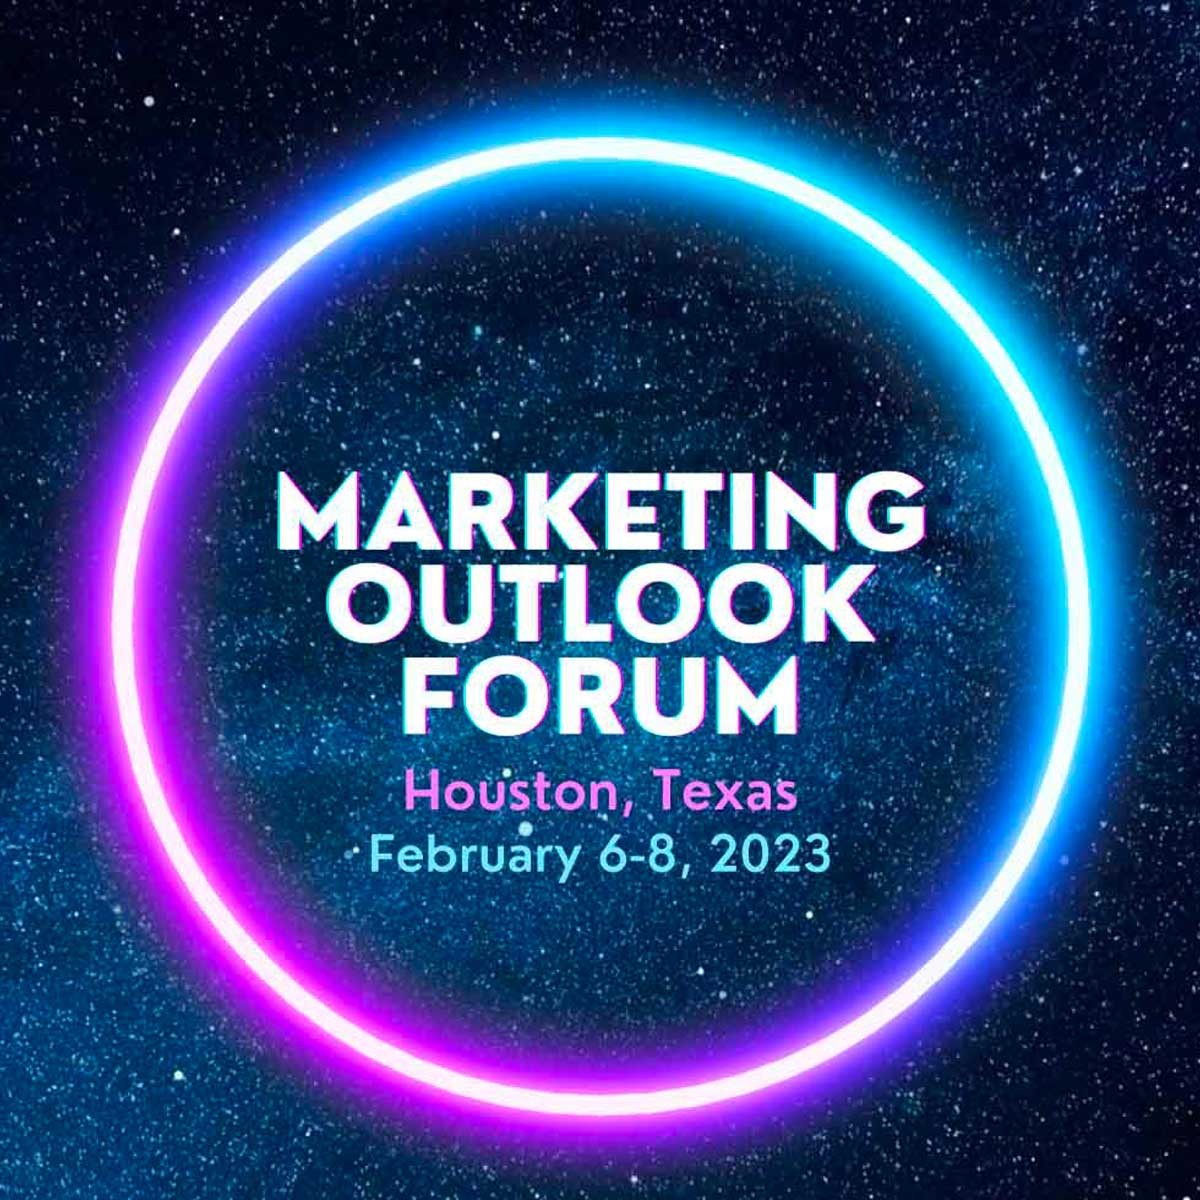 Marketing Outlook Forum, Houston, Texas, February 6-8. 2023.